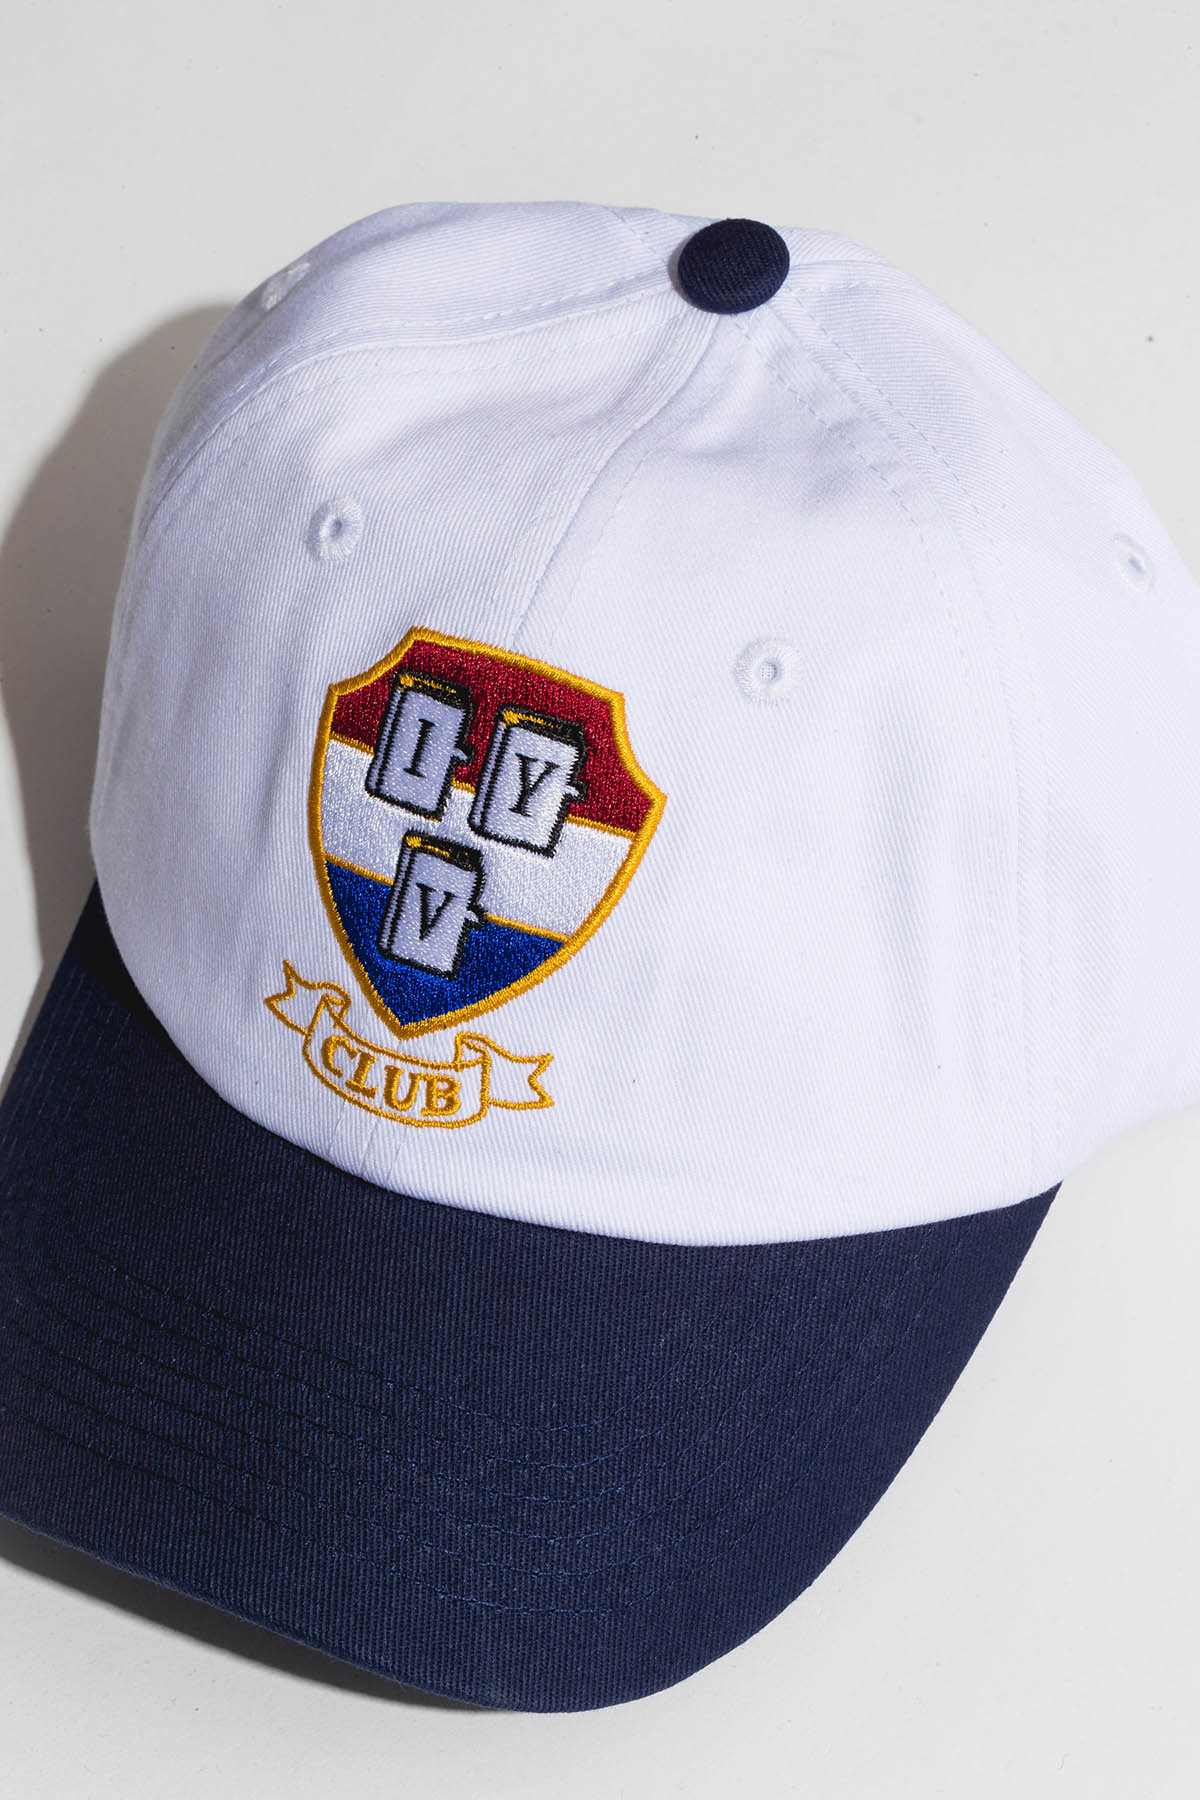 AN IVY Caps White Navy Emblem Club Cap